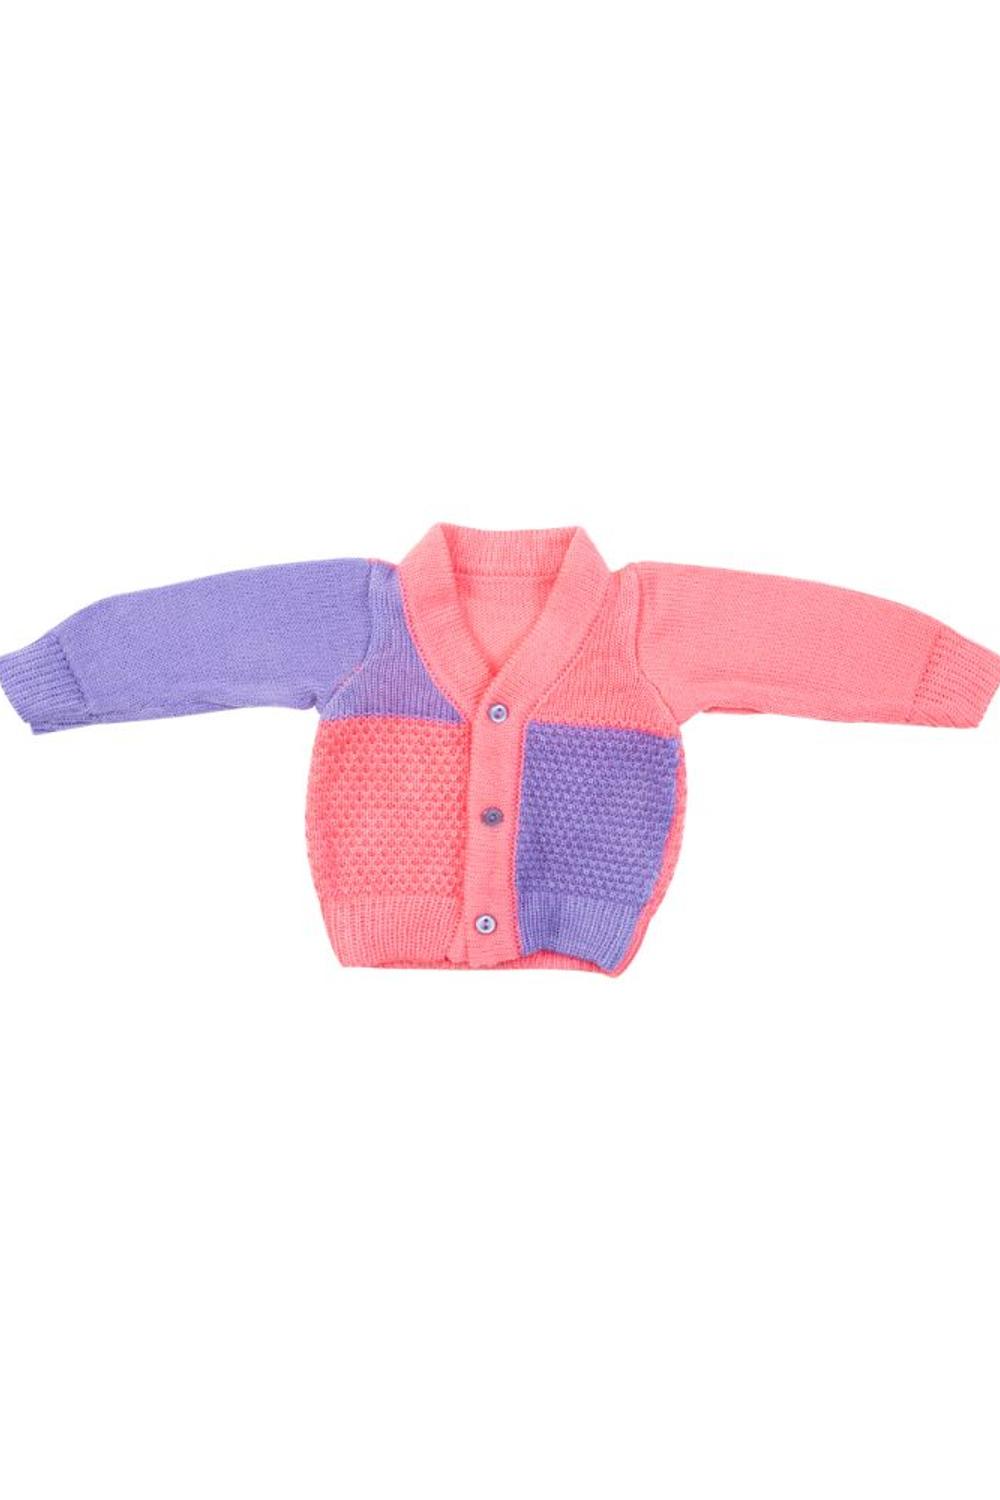 Mee Mee Baby Sweater Sets Pink_Purple